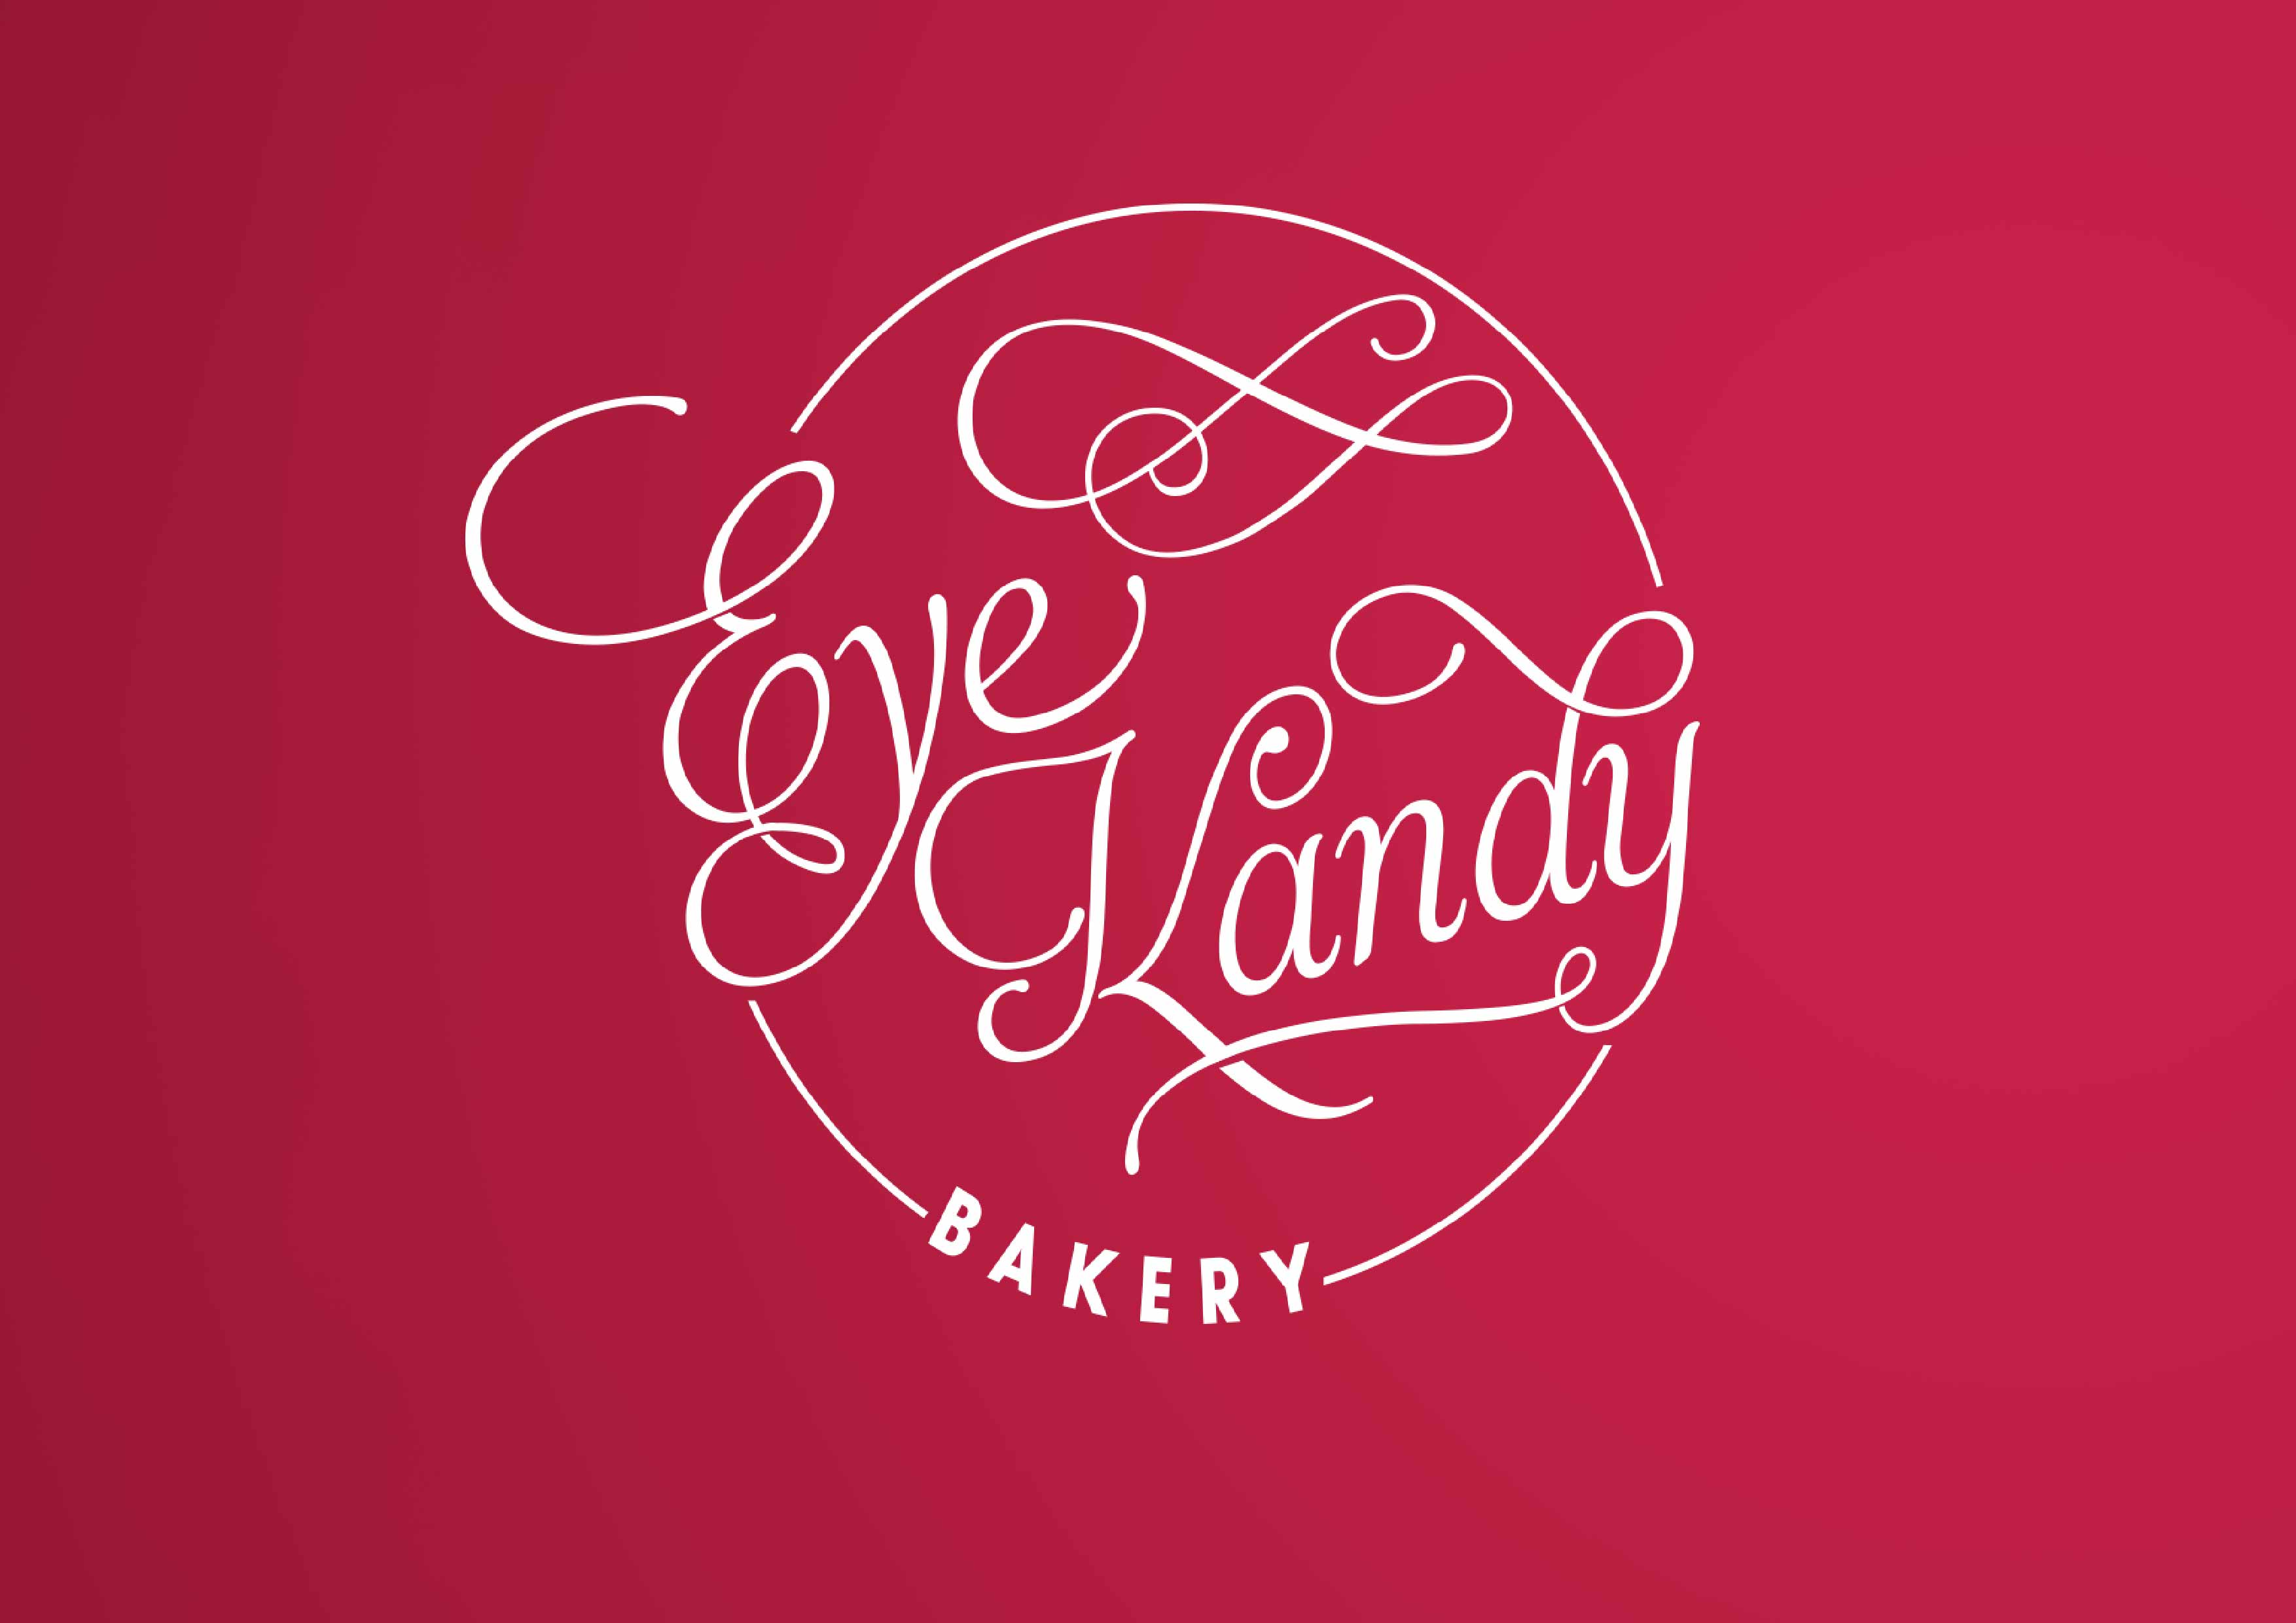 eye kandy logo